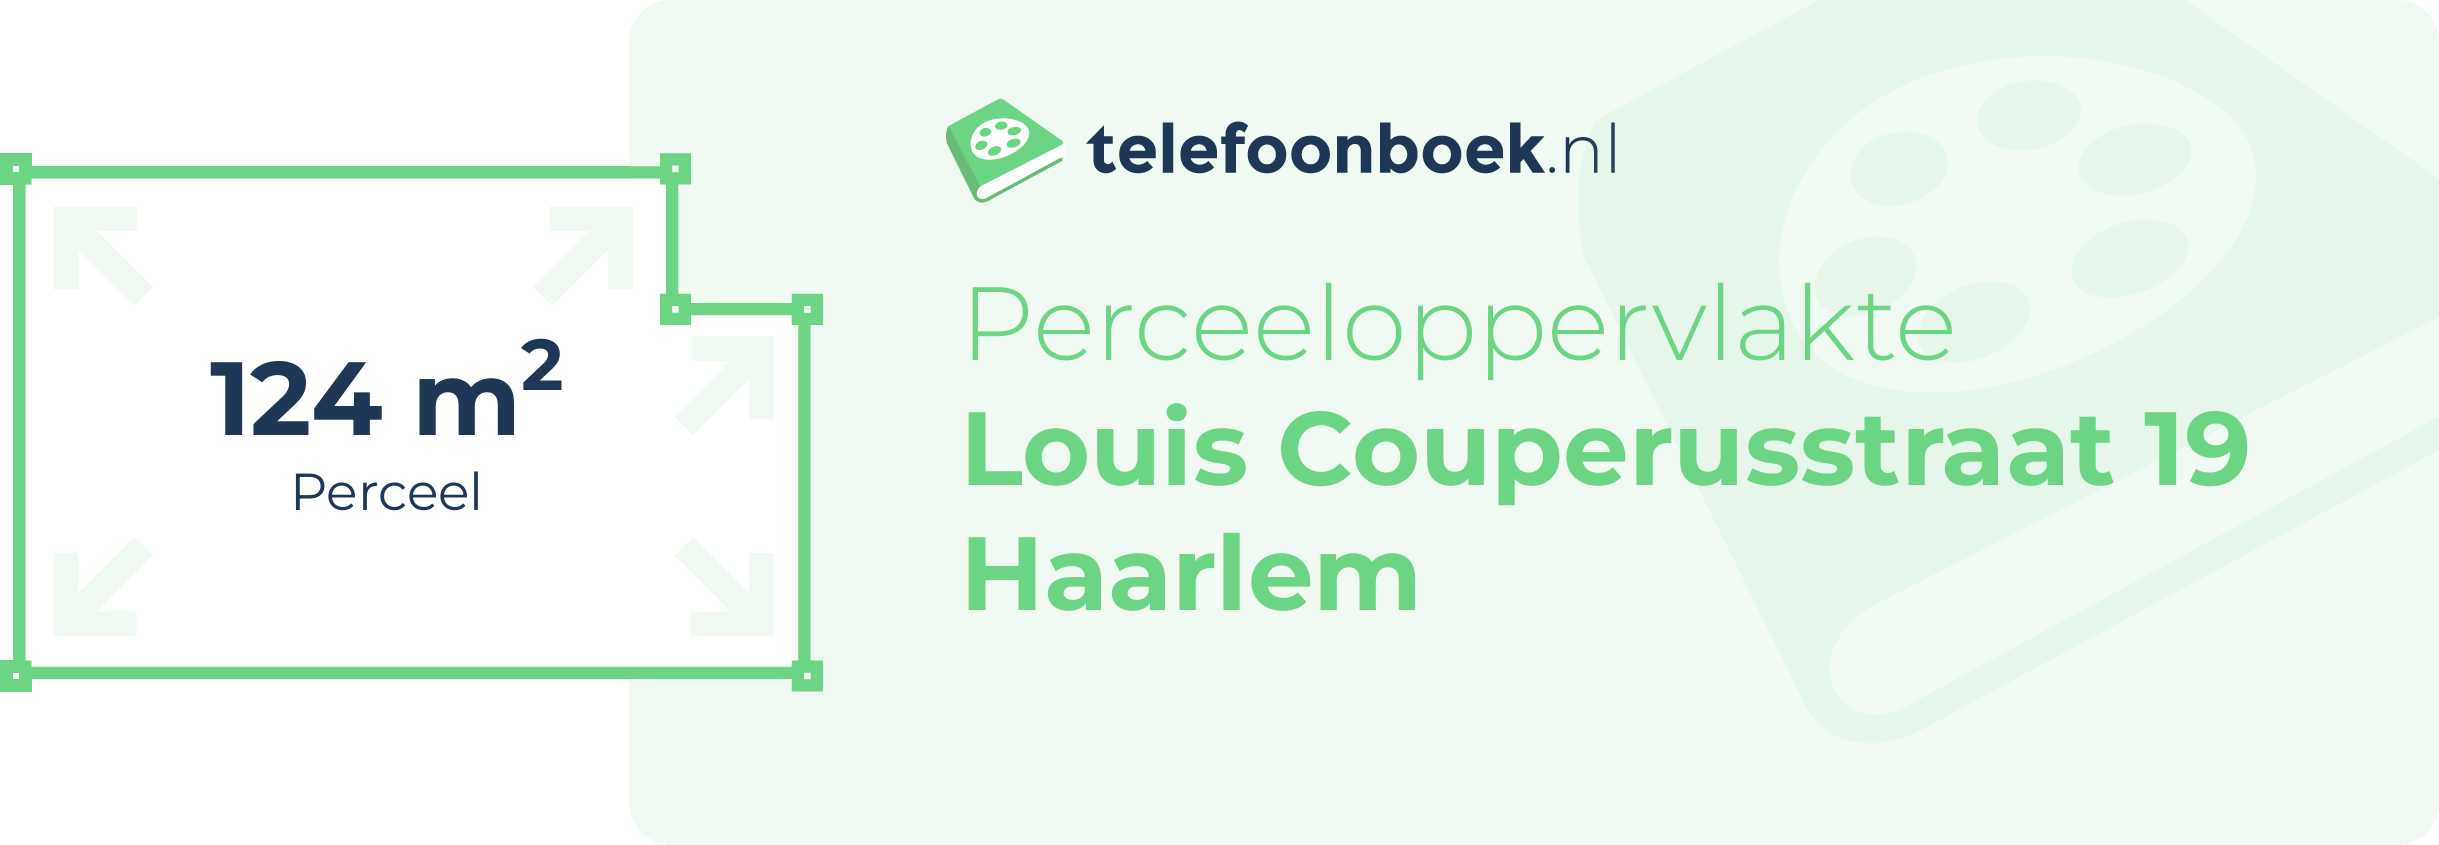 Perceeloppervlakte Louis Couperusstraat 19 Haarlem